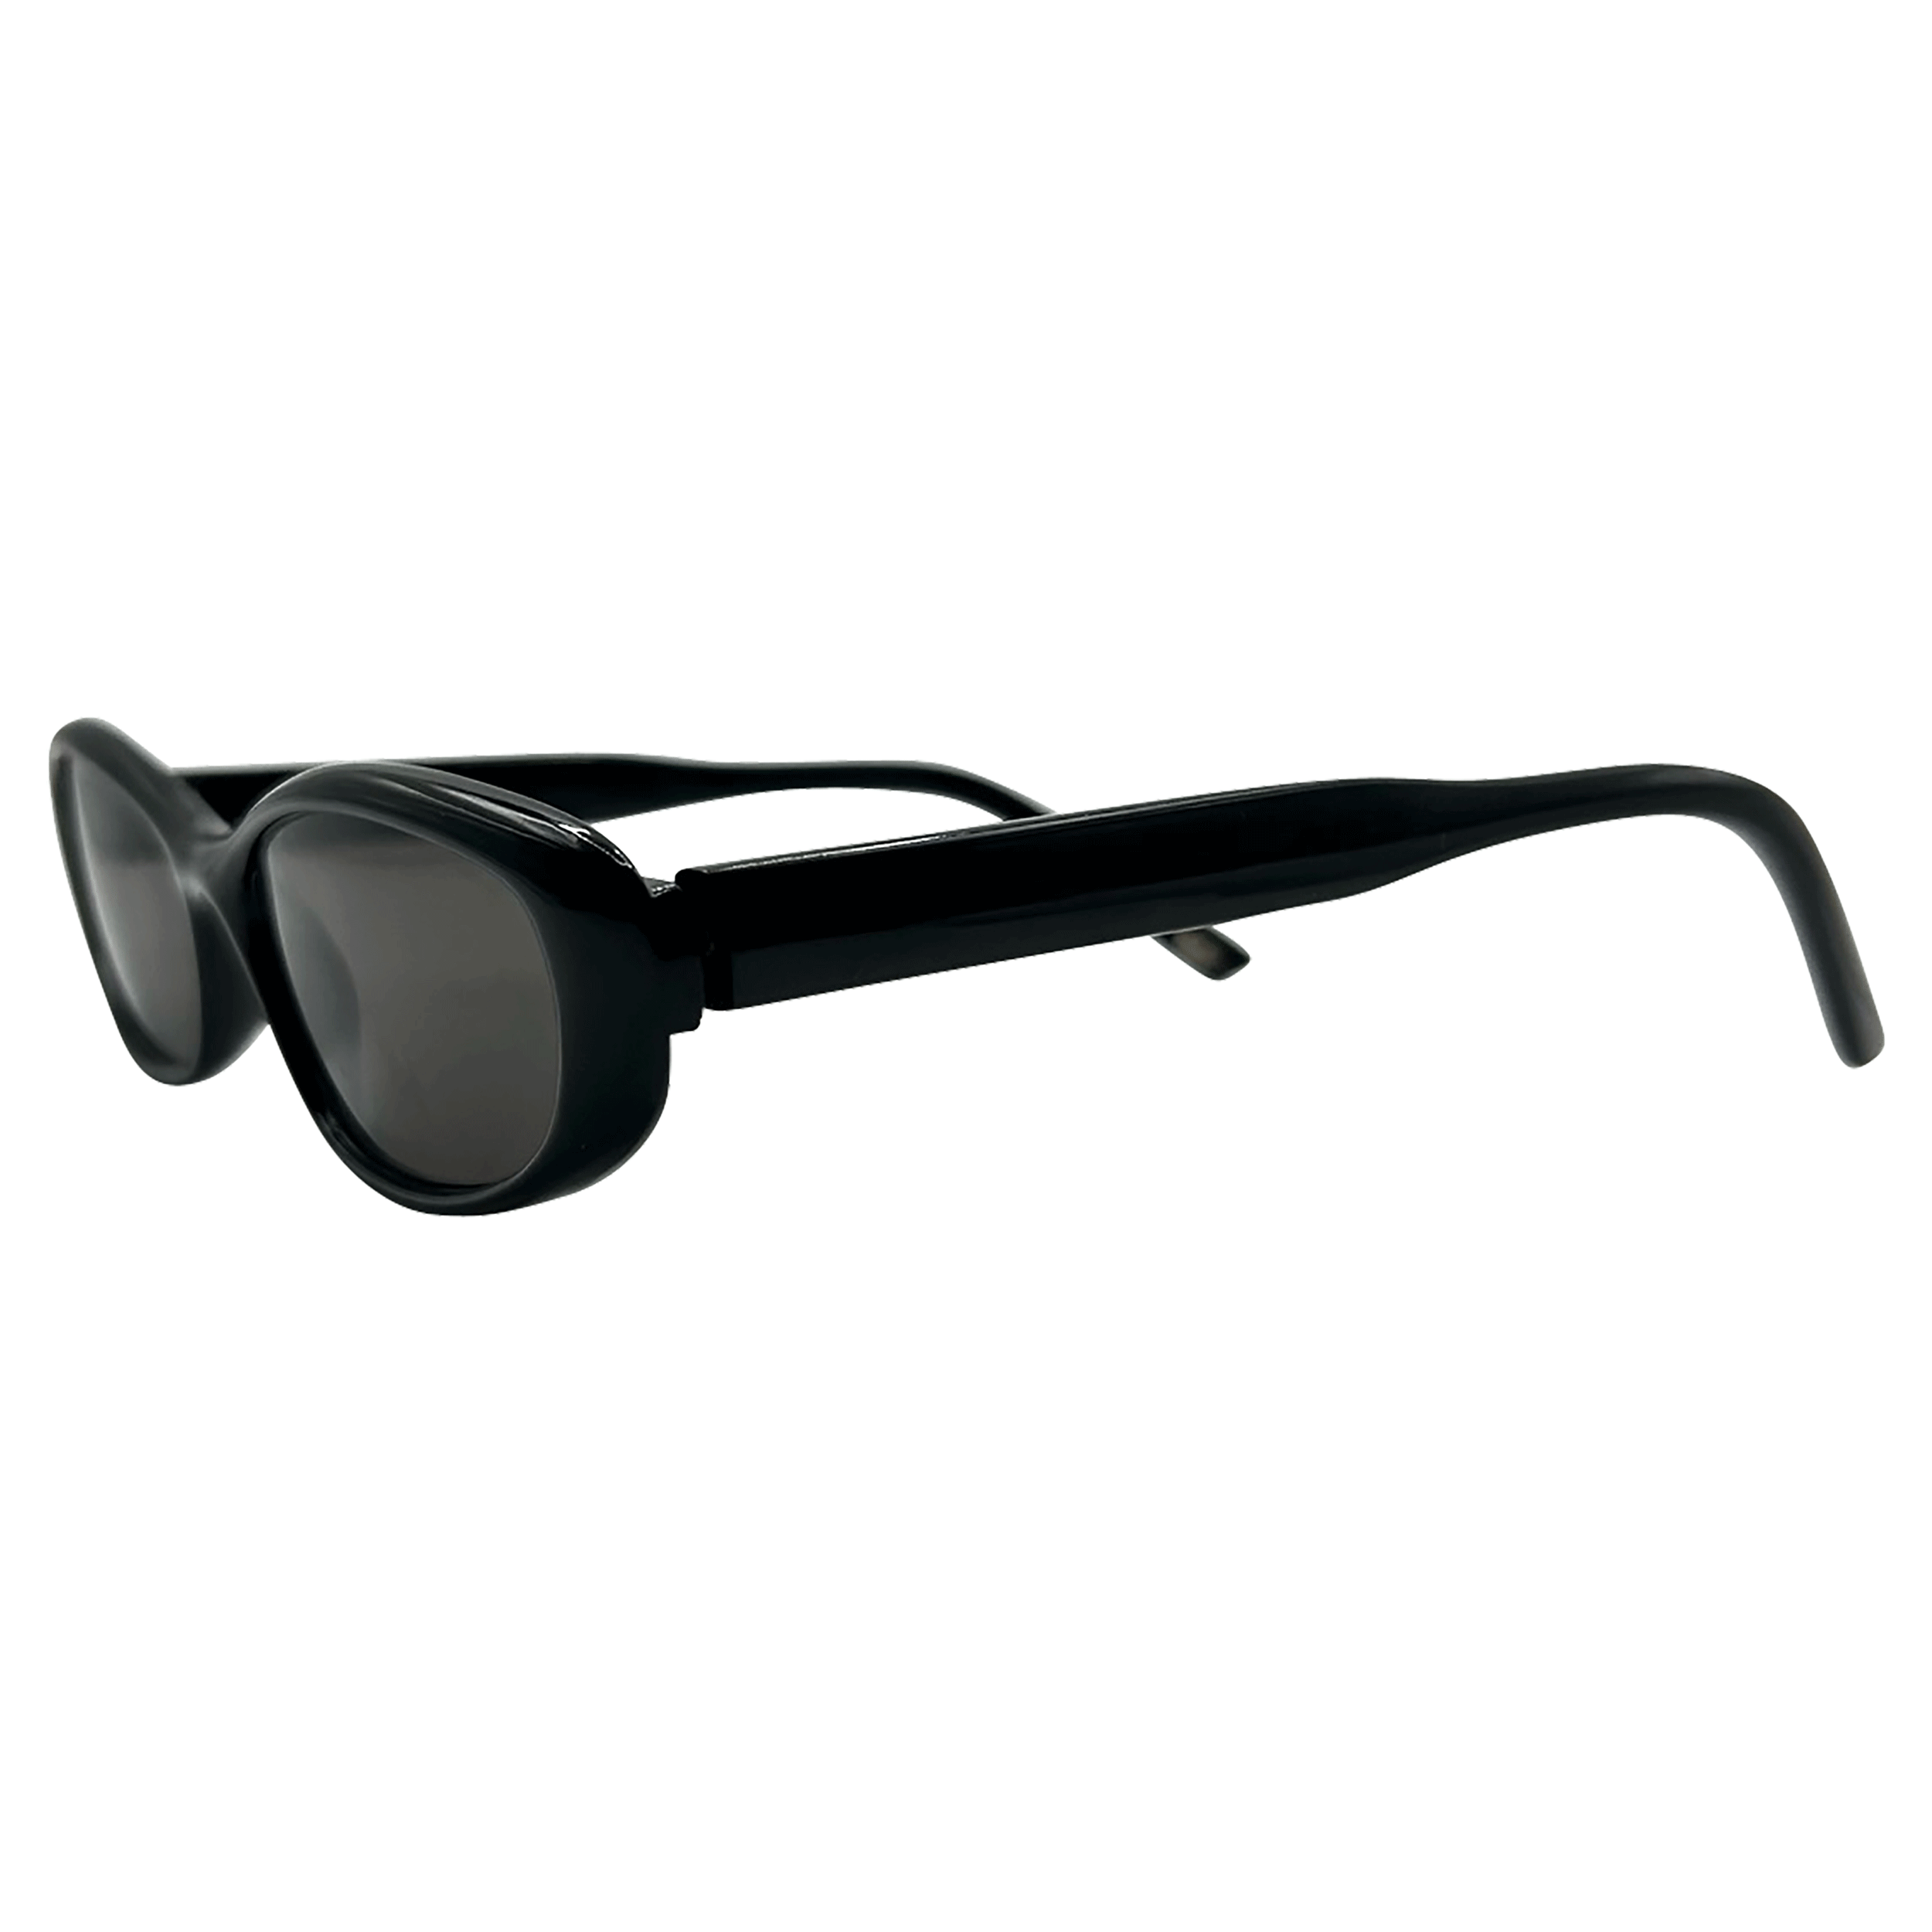 KIPPER Indie Sunglasses *As Seen On: Hailey Bieber*